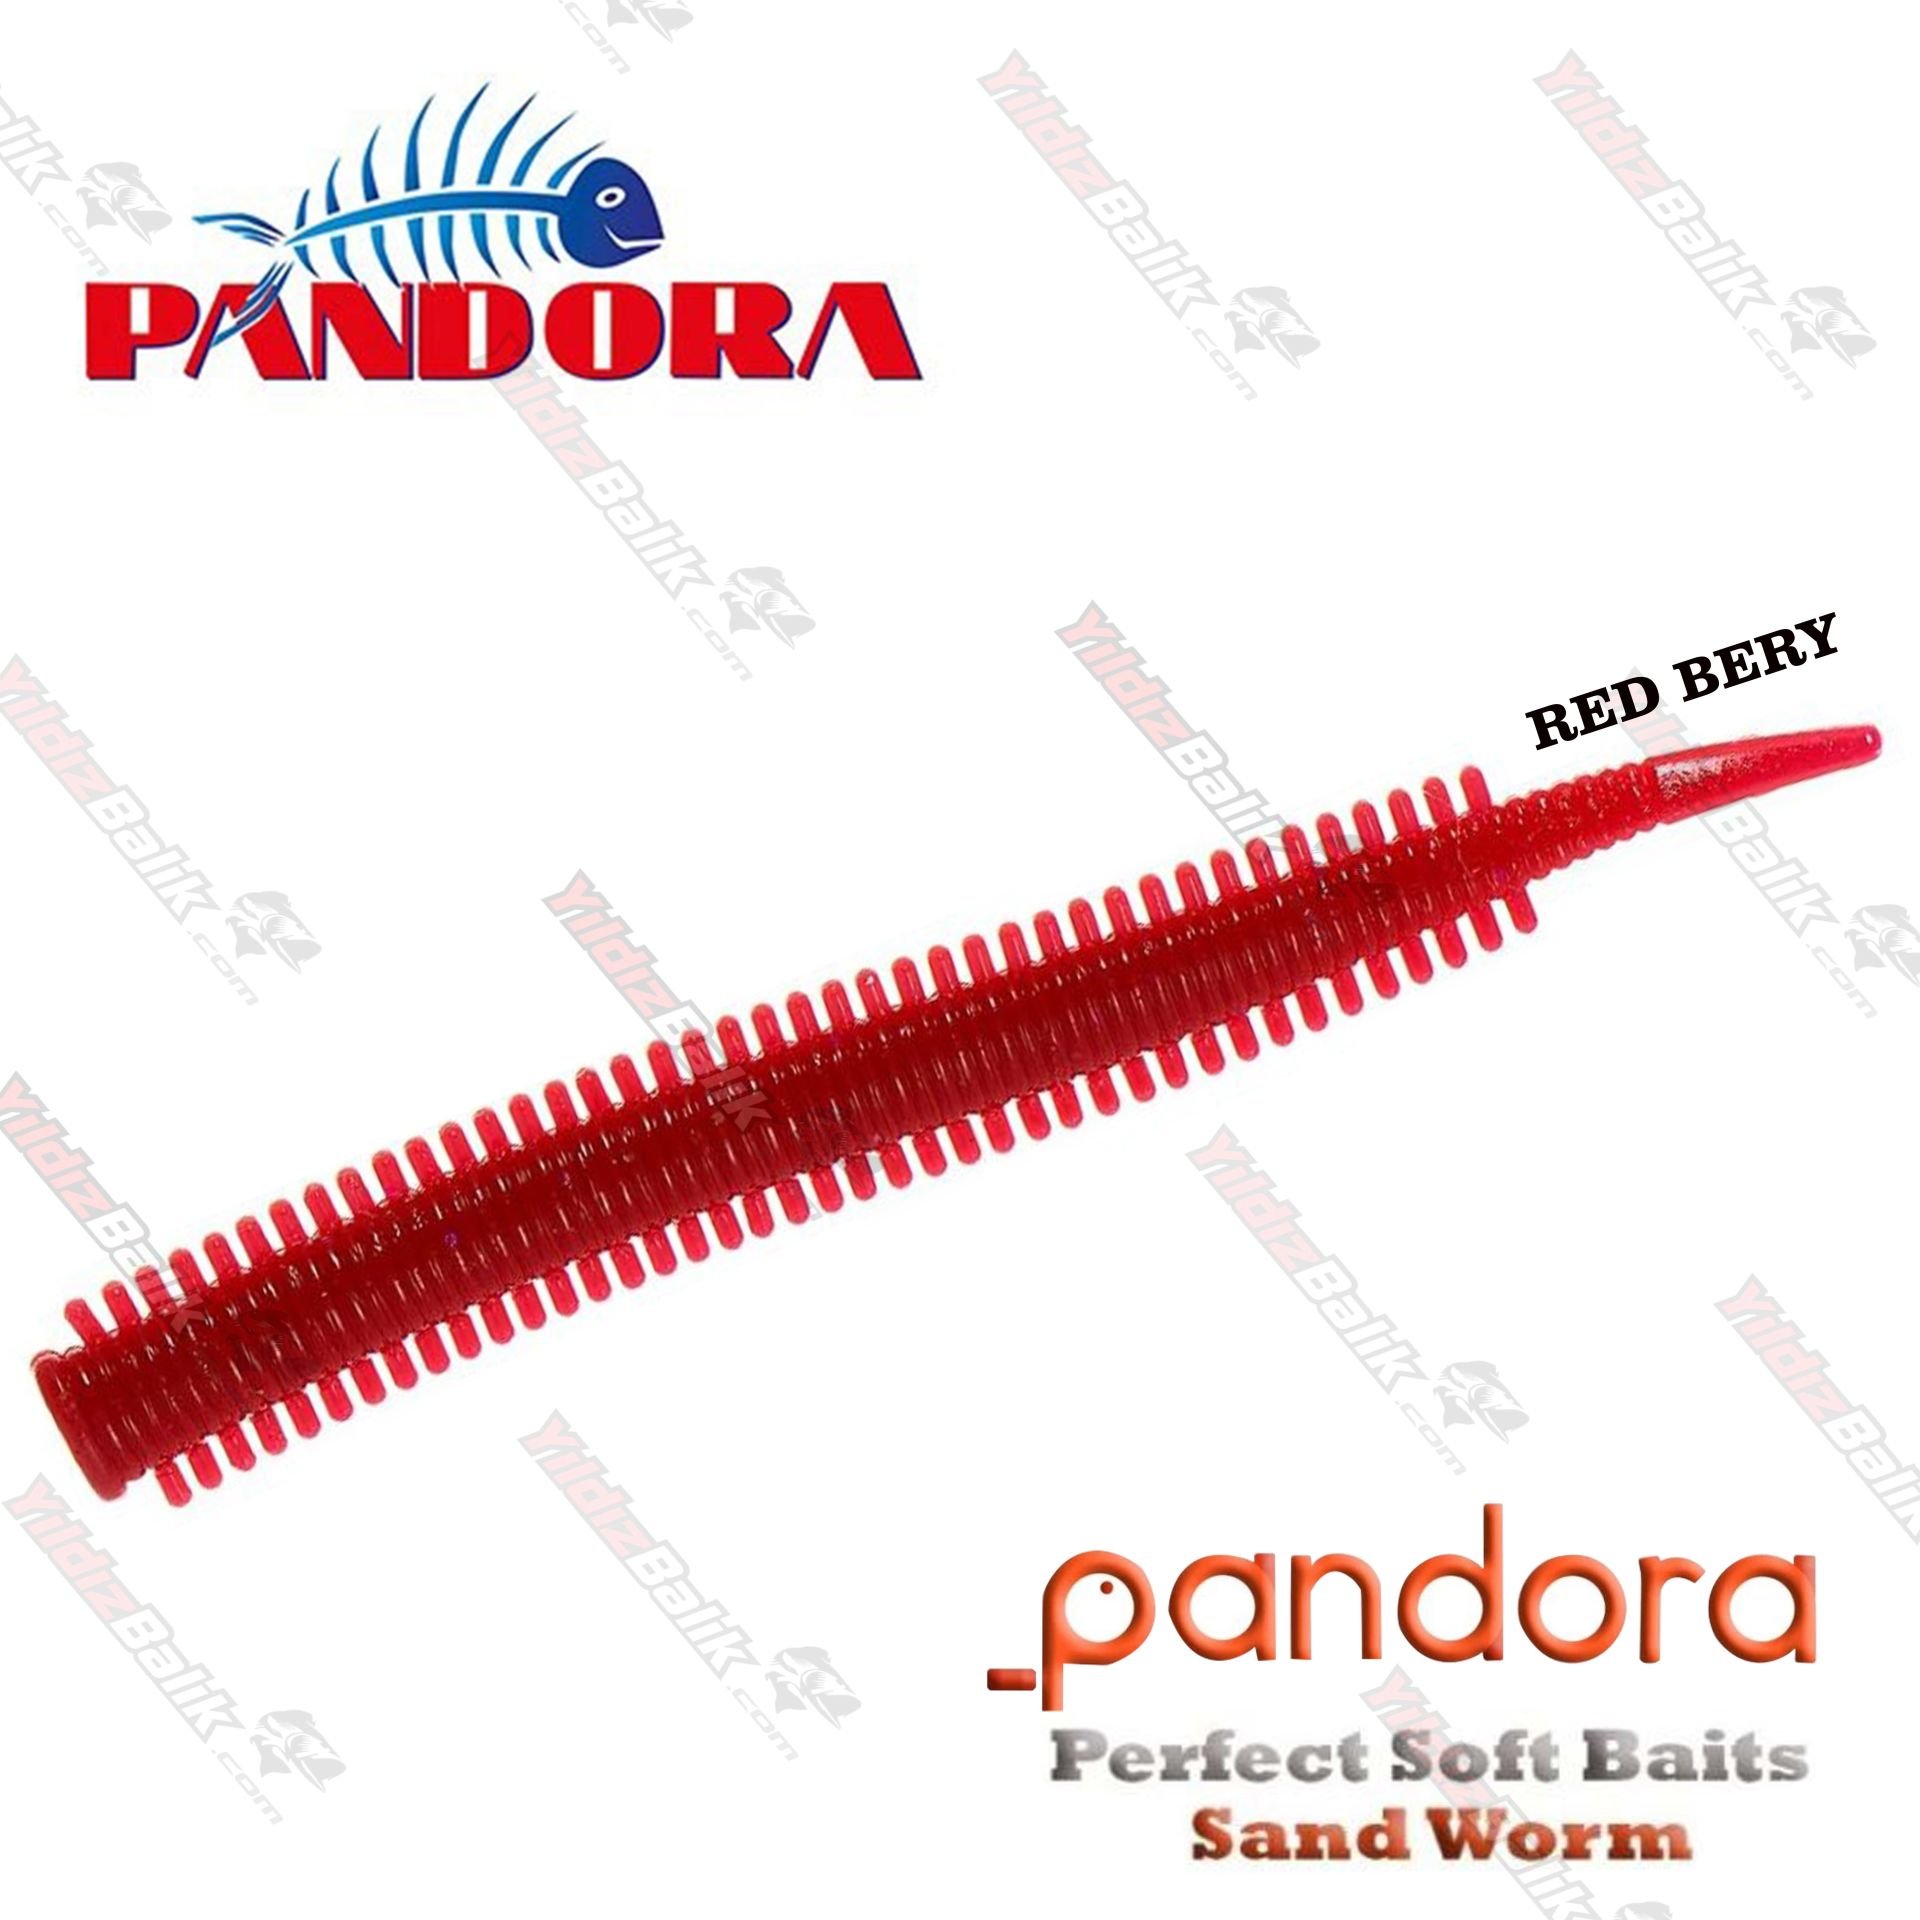 Pandora Perfect Soft Baits Sandworm 7 cm RED BERY Pandora Silikon yemler (  LRF )